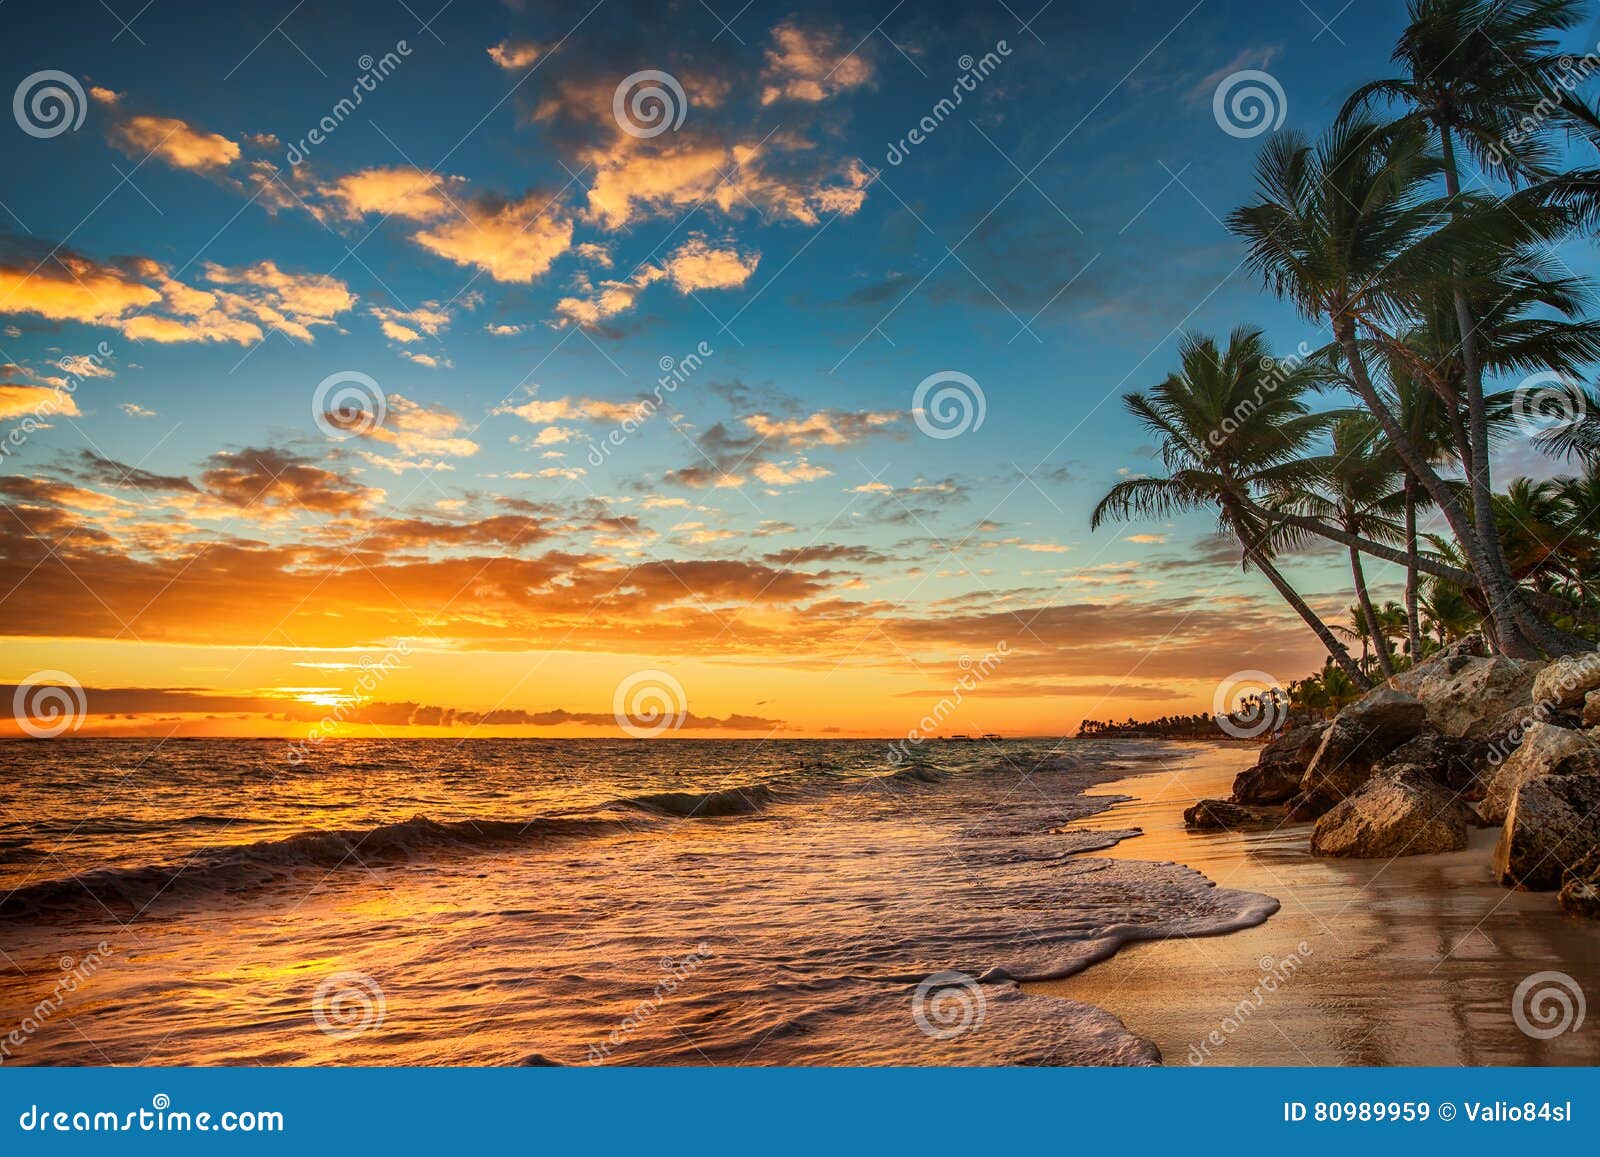 sunrise on a tropical island. landscape of paradise tropical isl